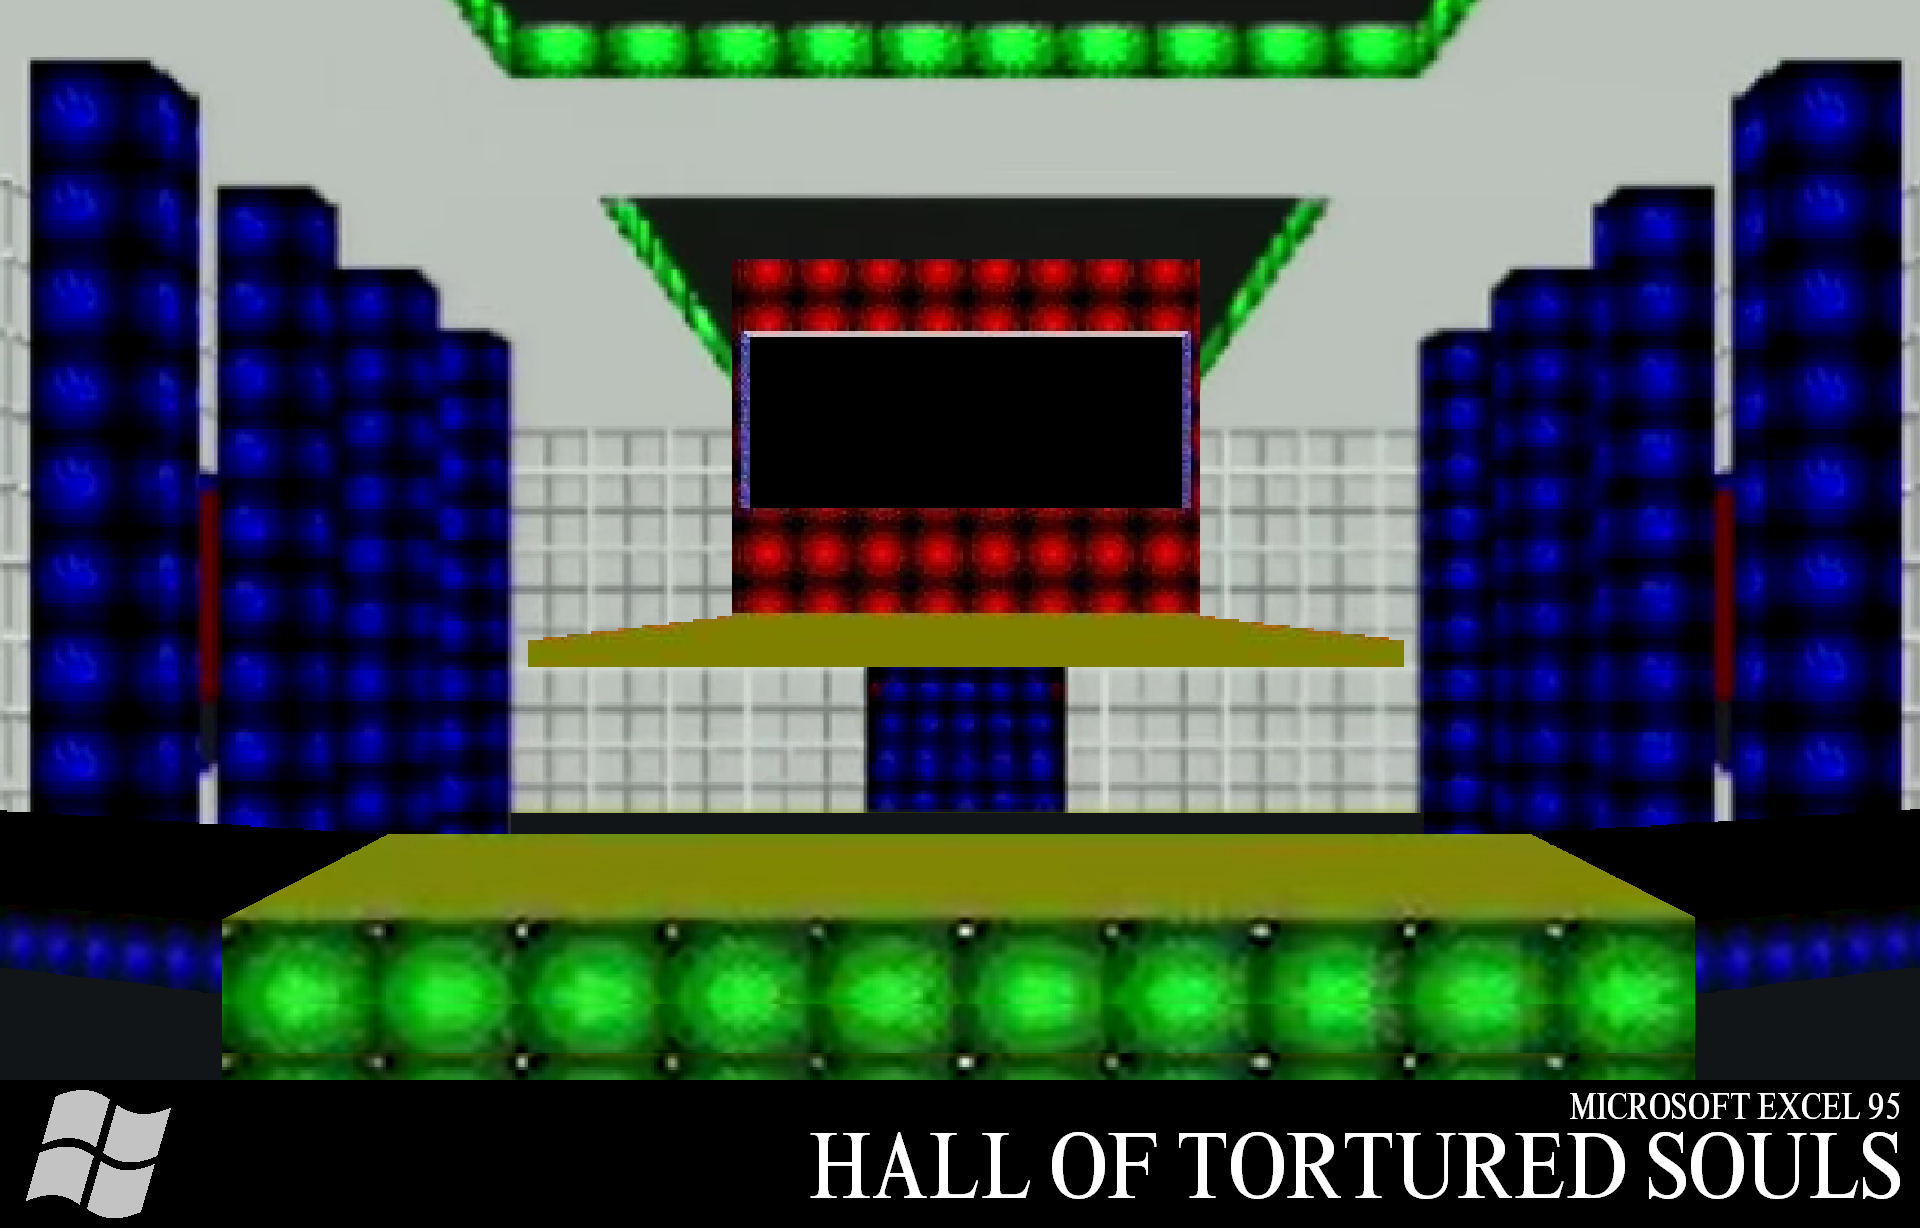 hall of tortured souls